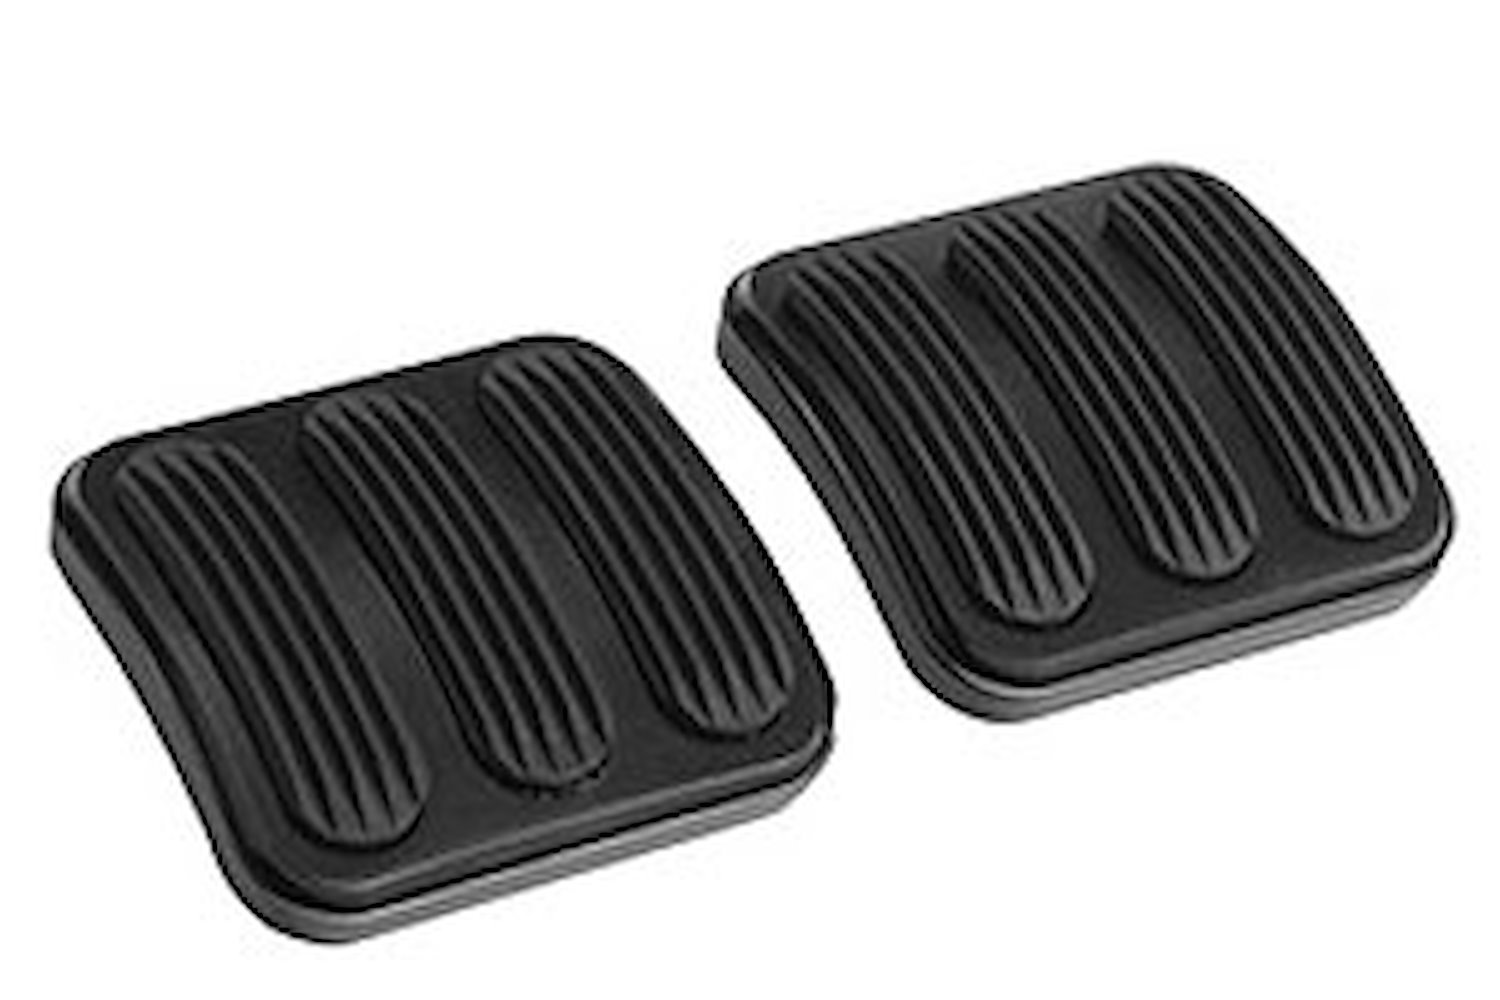 Billet Aluminum Brake/Clutch Pad Midnight Series Black w/Rubber Insert Each